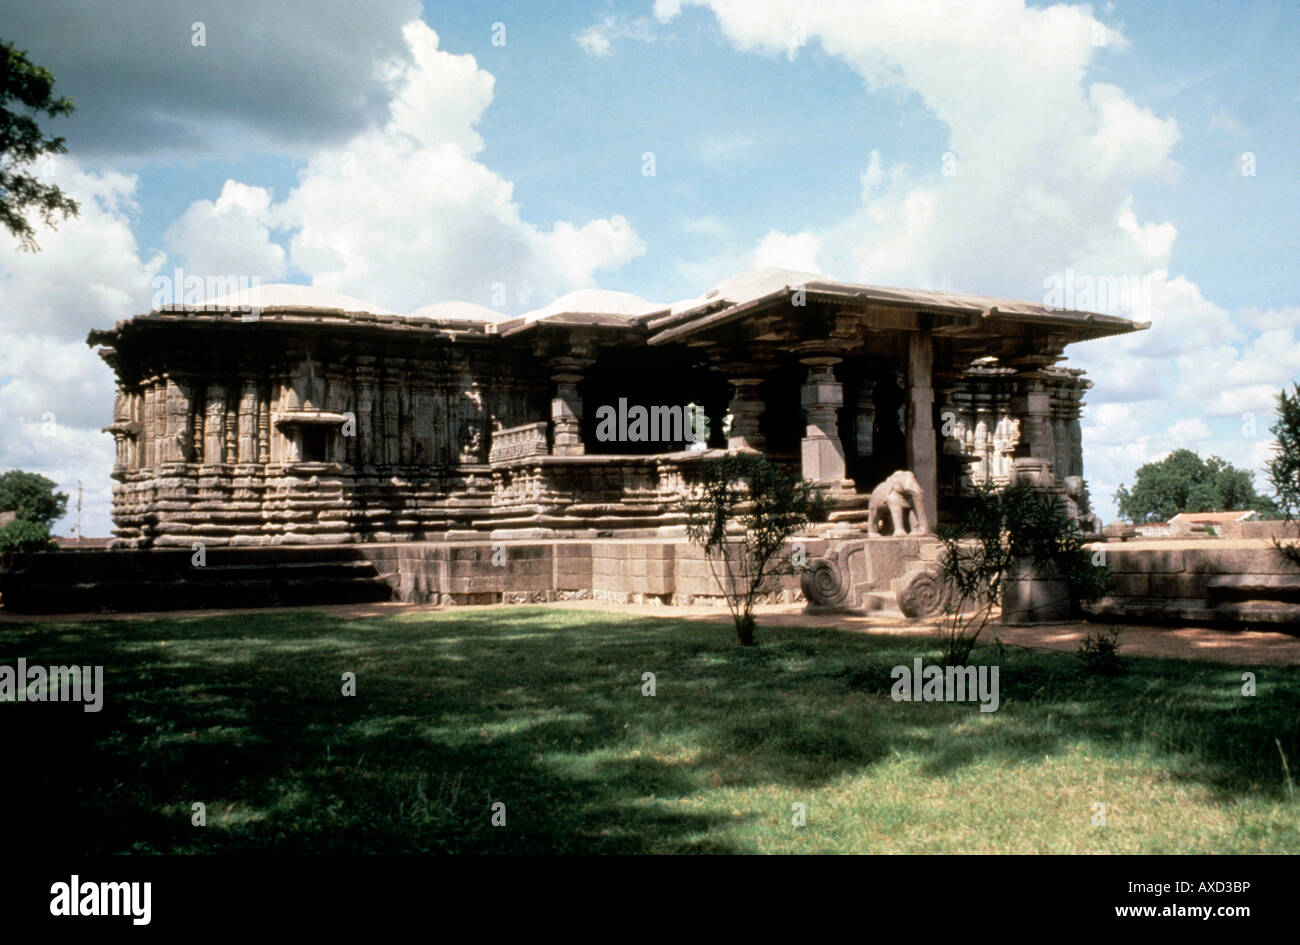 Hanamkonda (Indien) Tausend Säule Tempel oder Rudreshwara Swamy Tempel Blick von Südwesten. Telangana, Indien Stockfoto